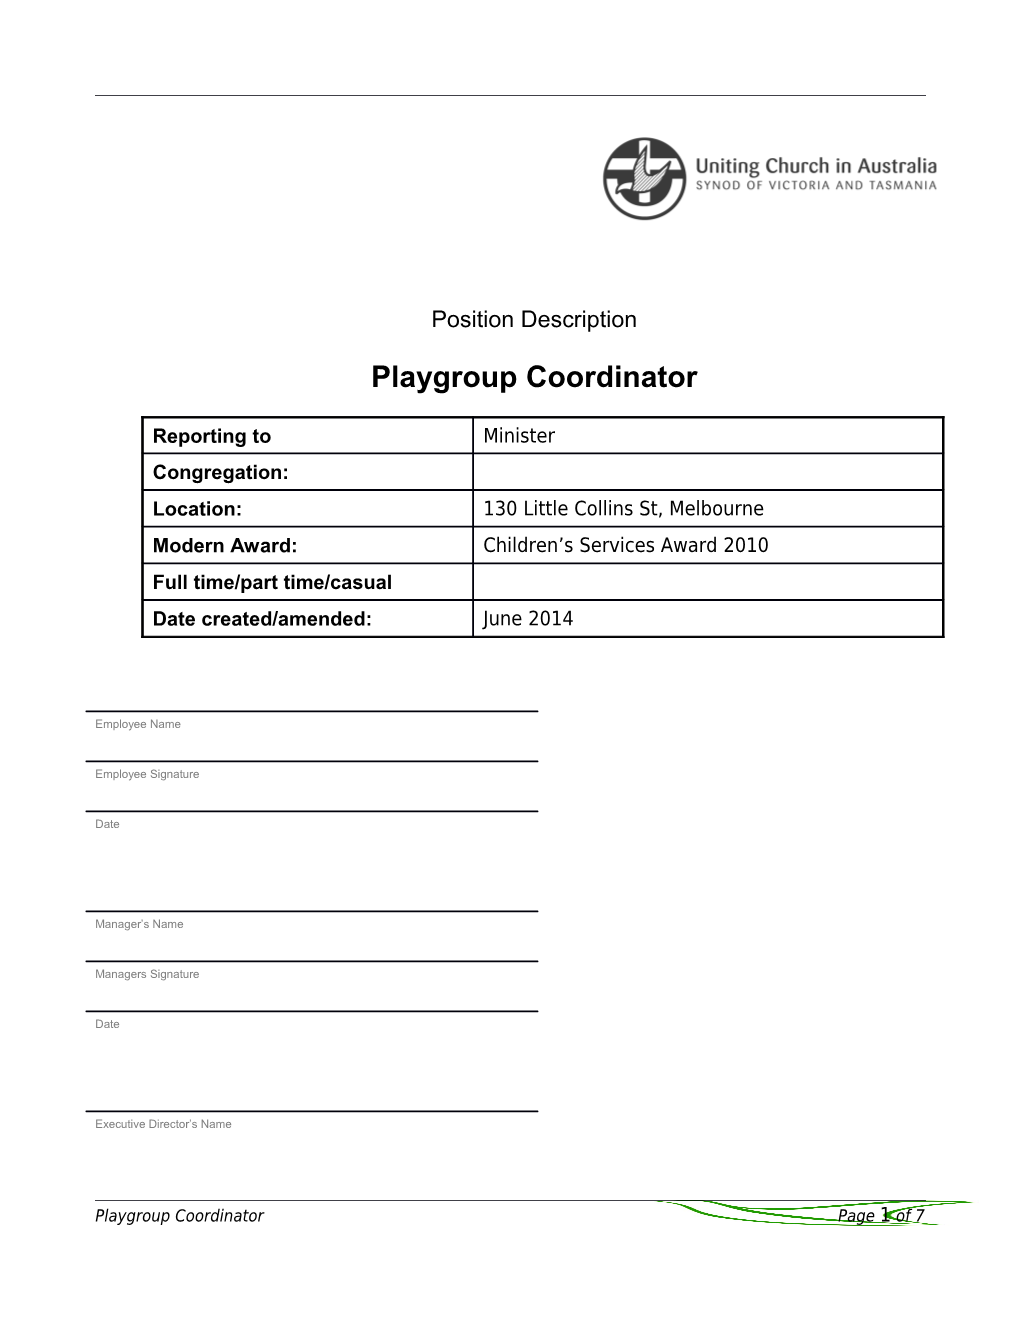 Playgroup Coordinator Position Description